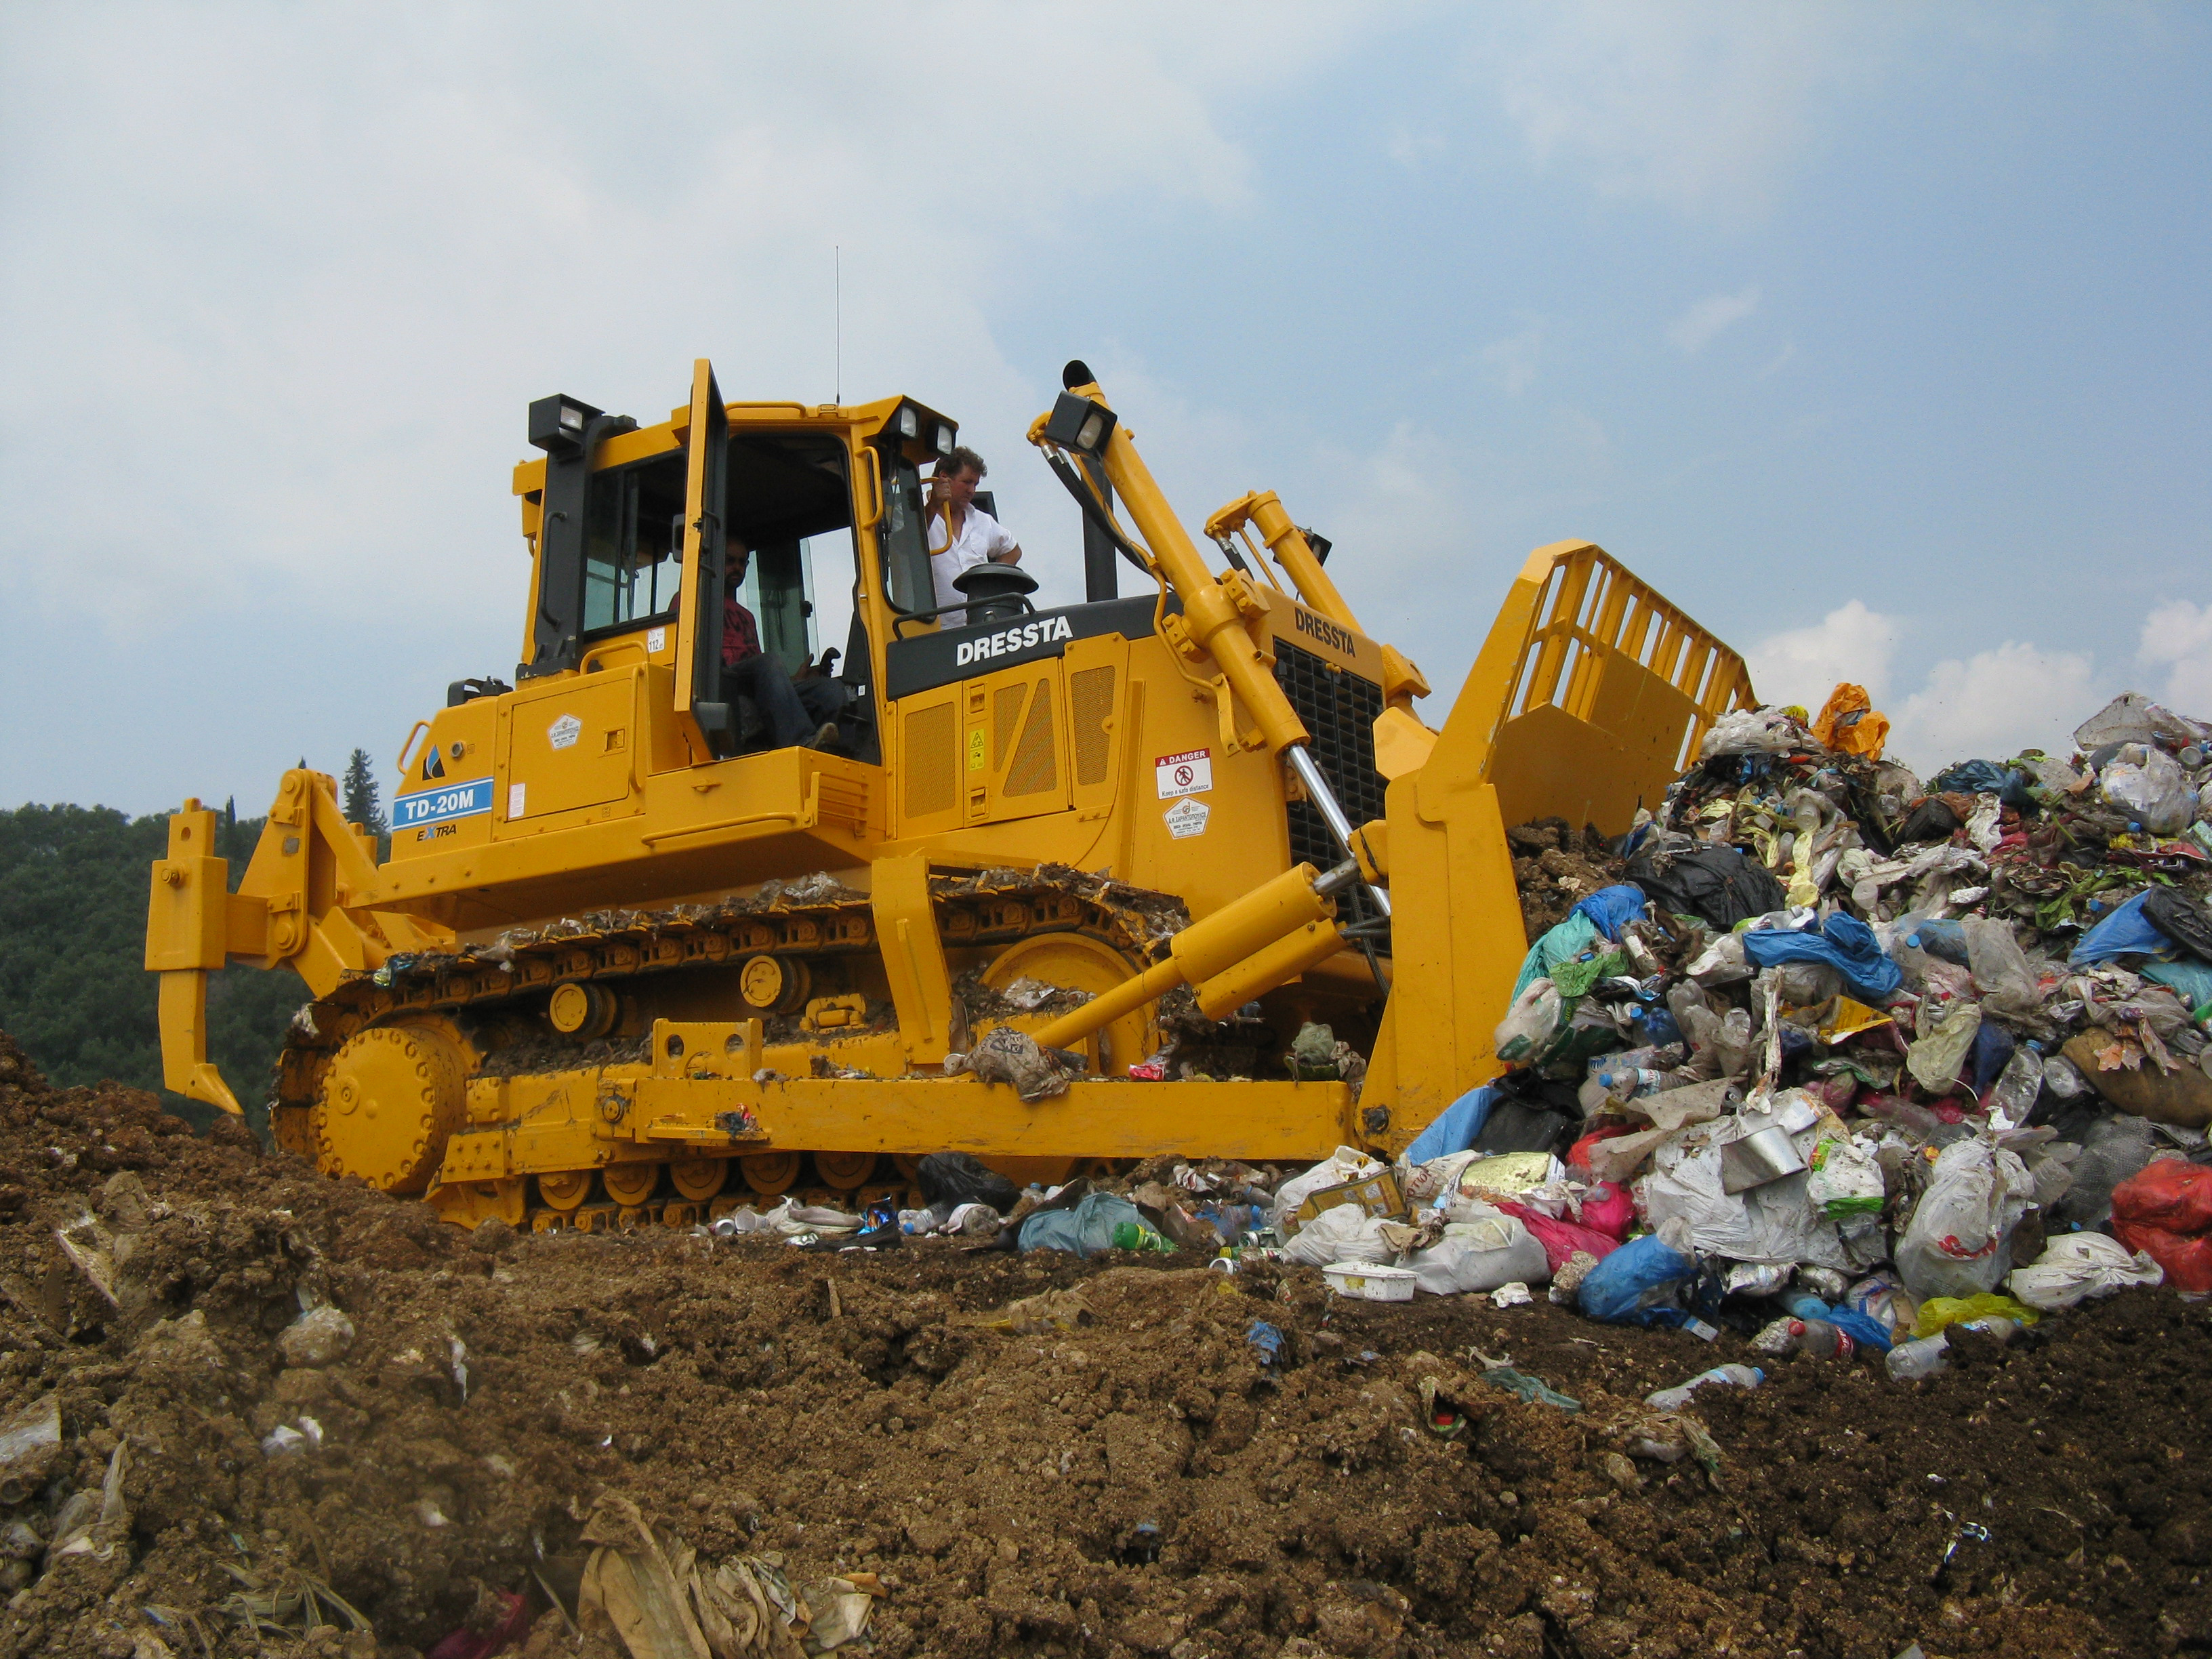 Landfill equipment photo